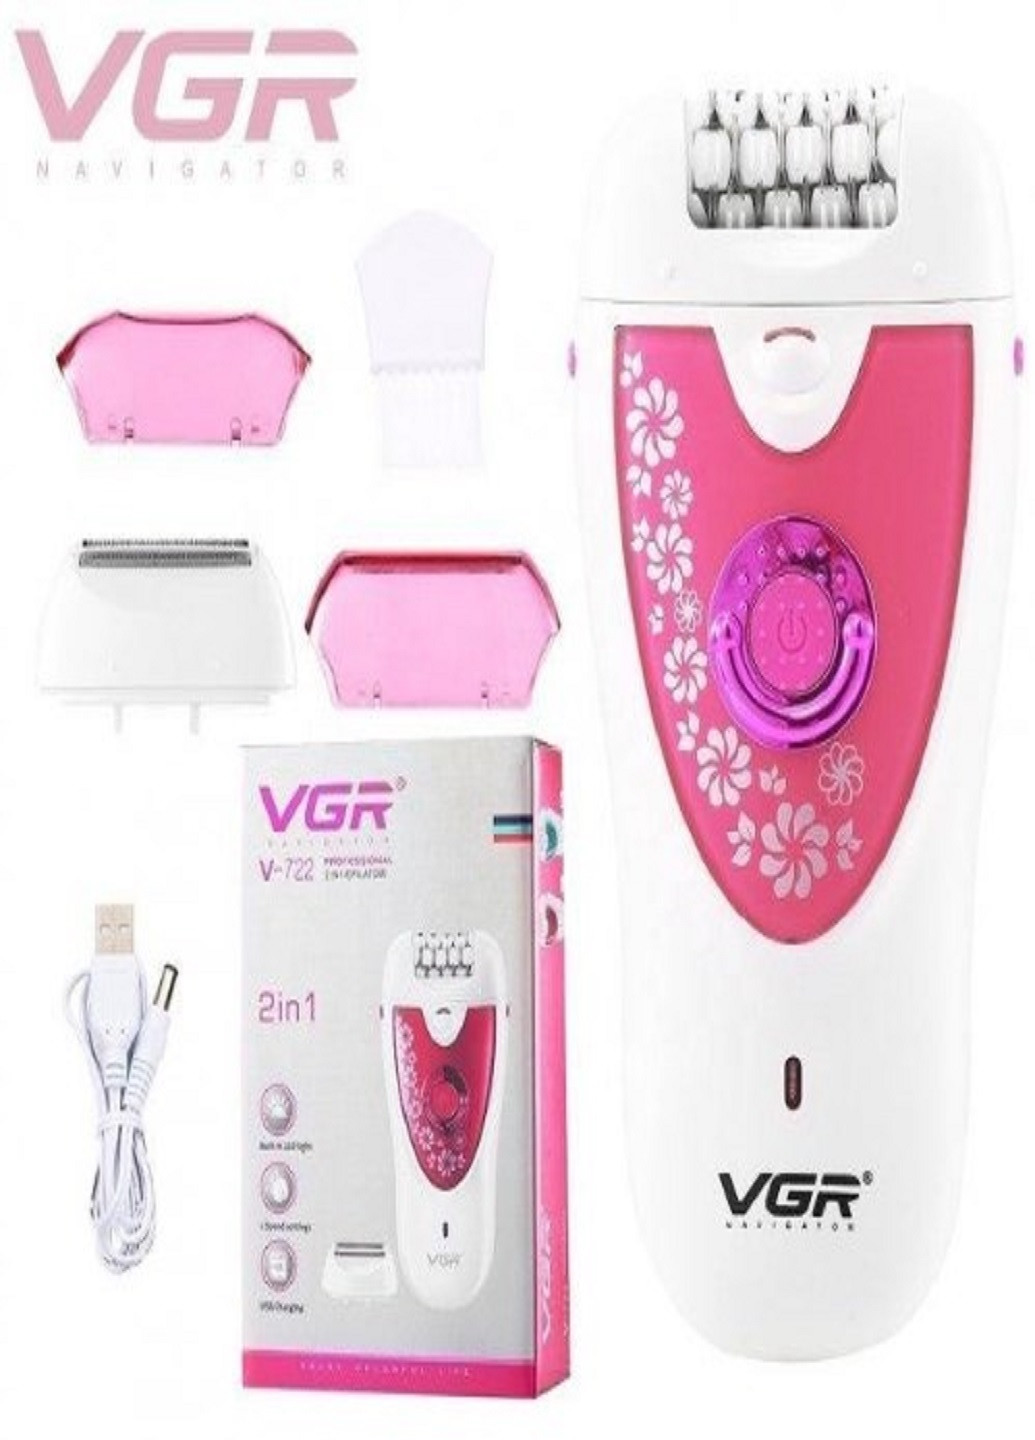 Женский эпилятор VGR V-722 аккумуляторный Розовый VTech (259906506)